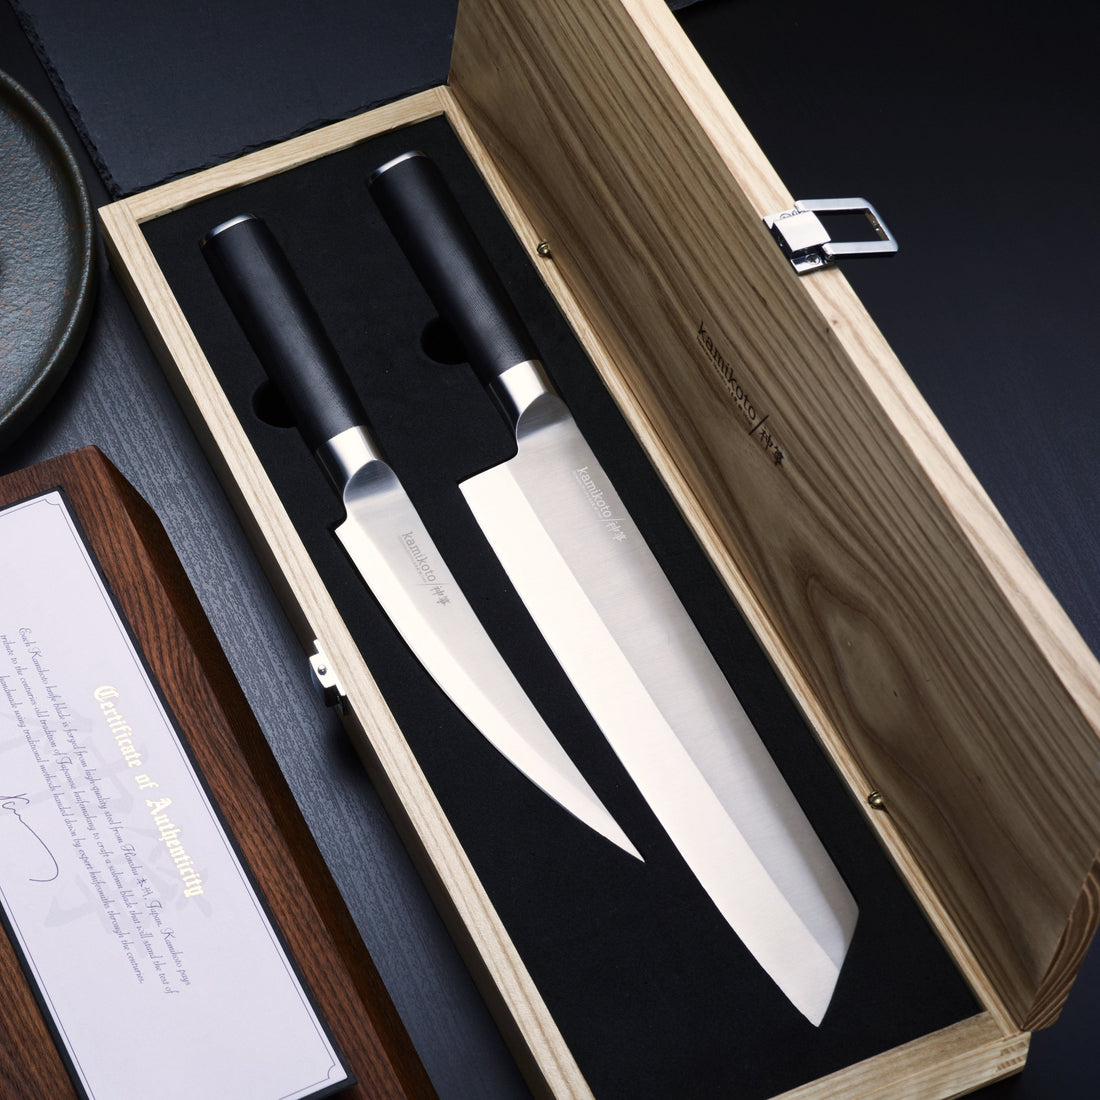 Kamikoto - Japanese Steel Knives on X: The Kensei set includes